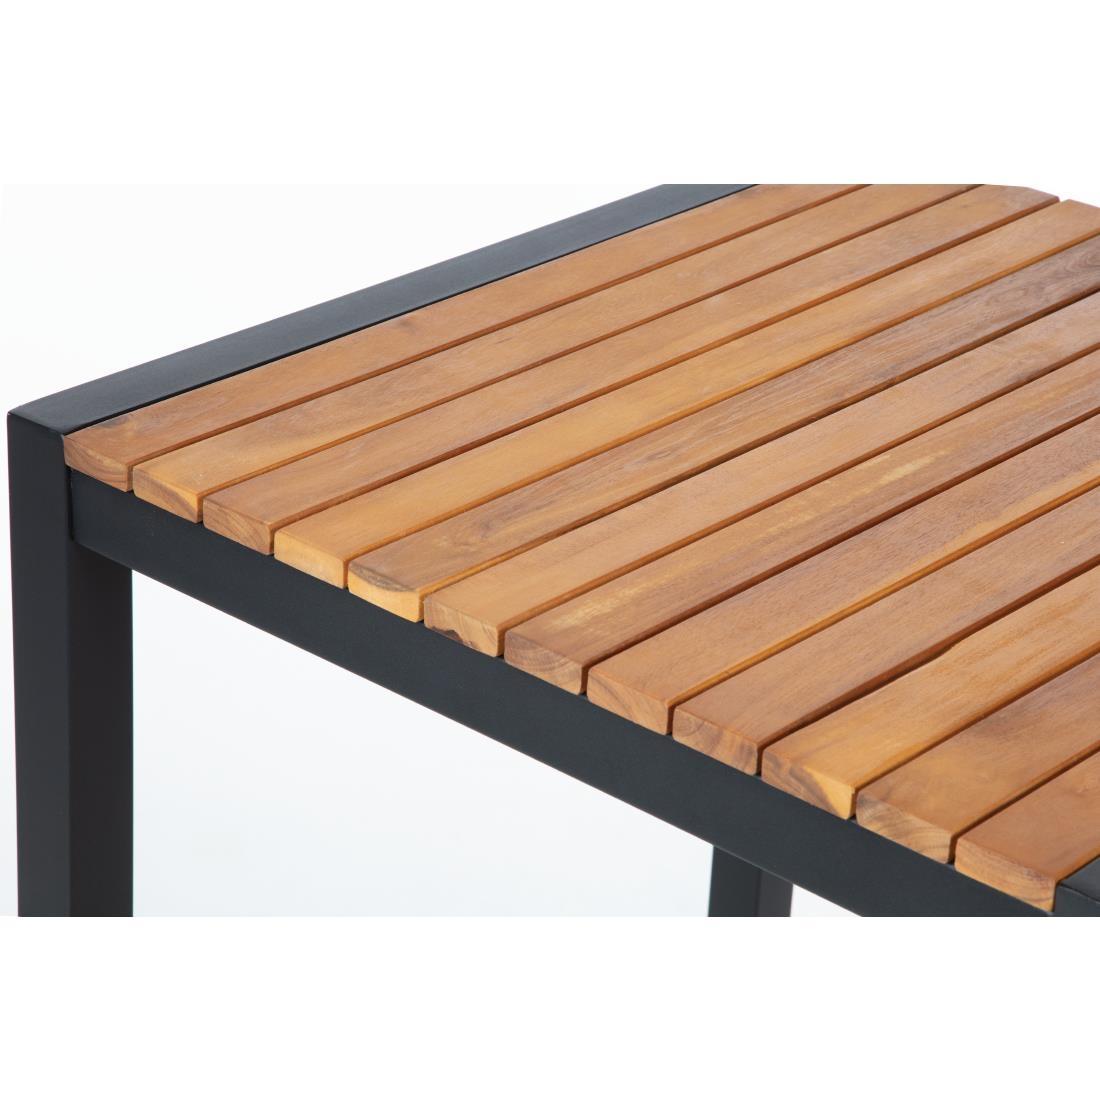 Bolero Square Steel and Acacia Bar Table 600mm - DS155  - 4